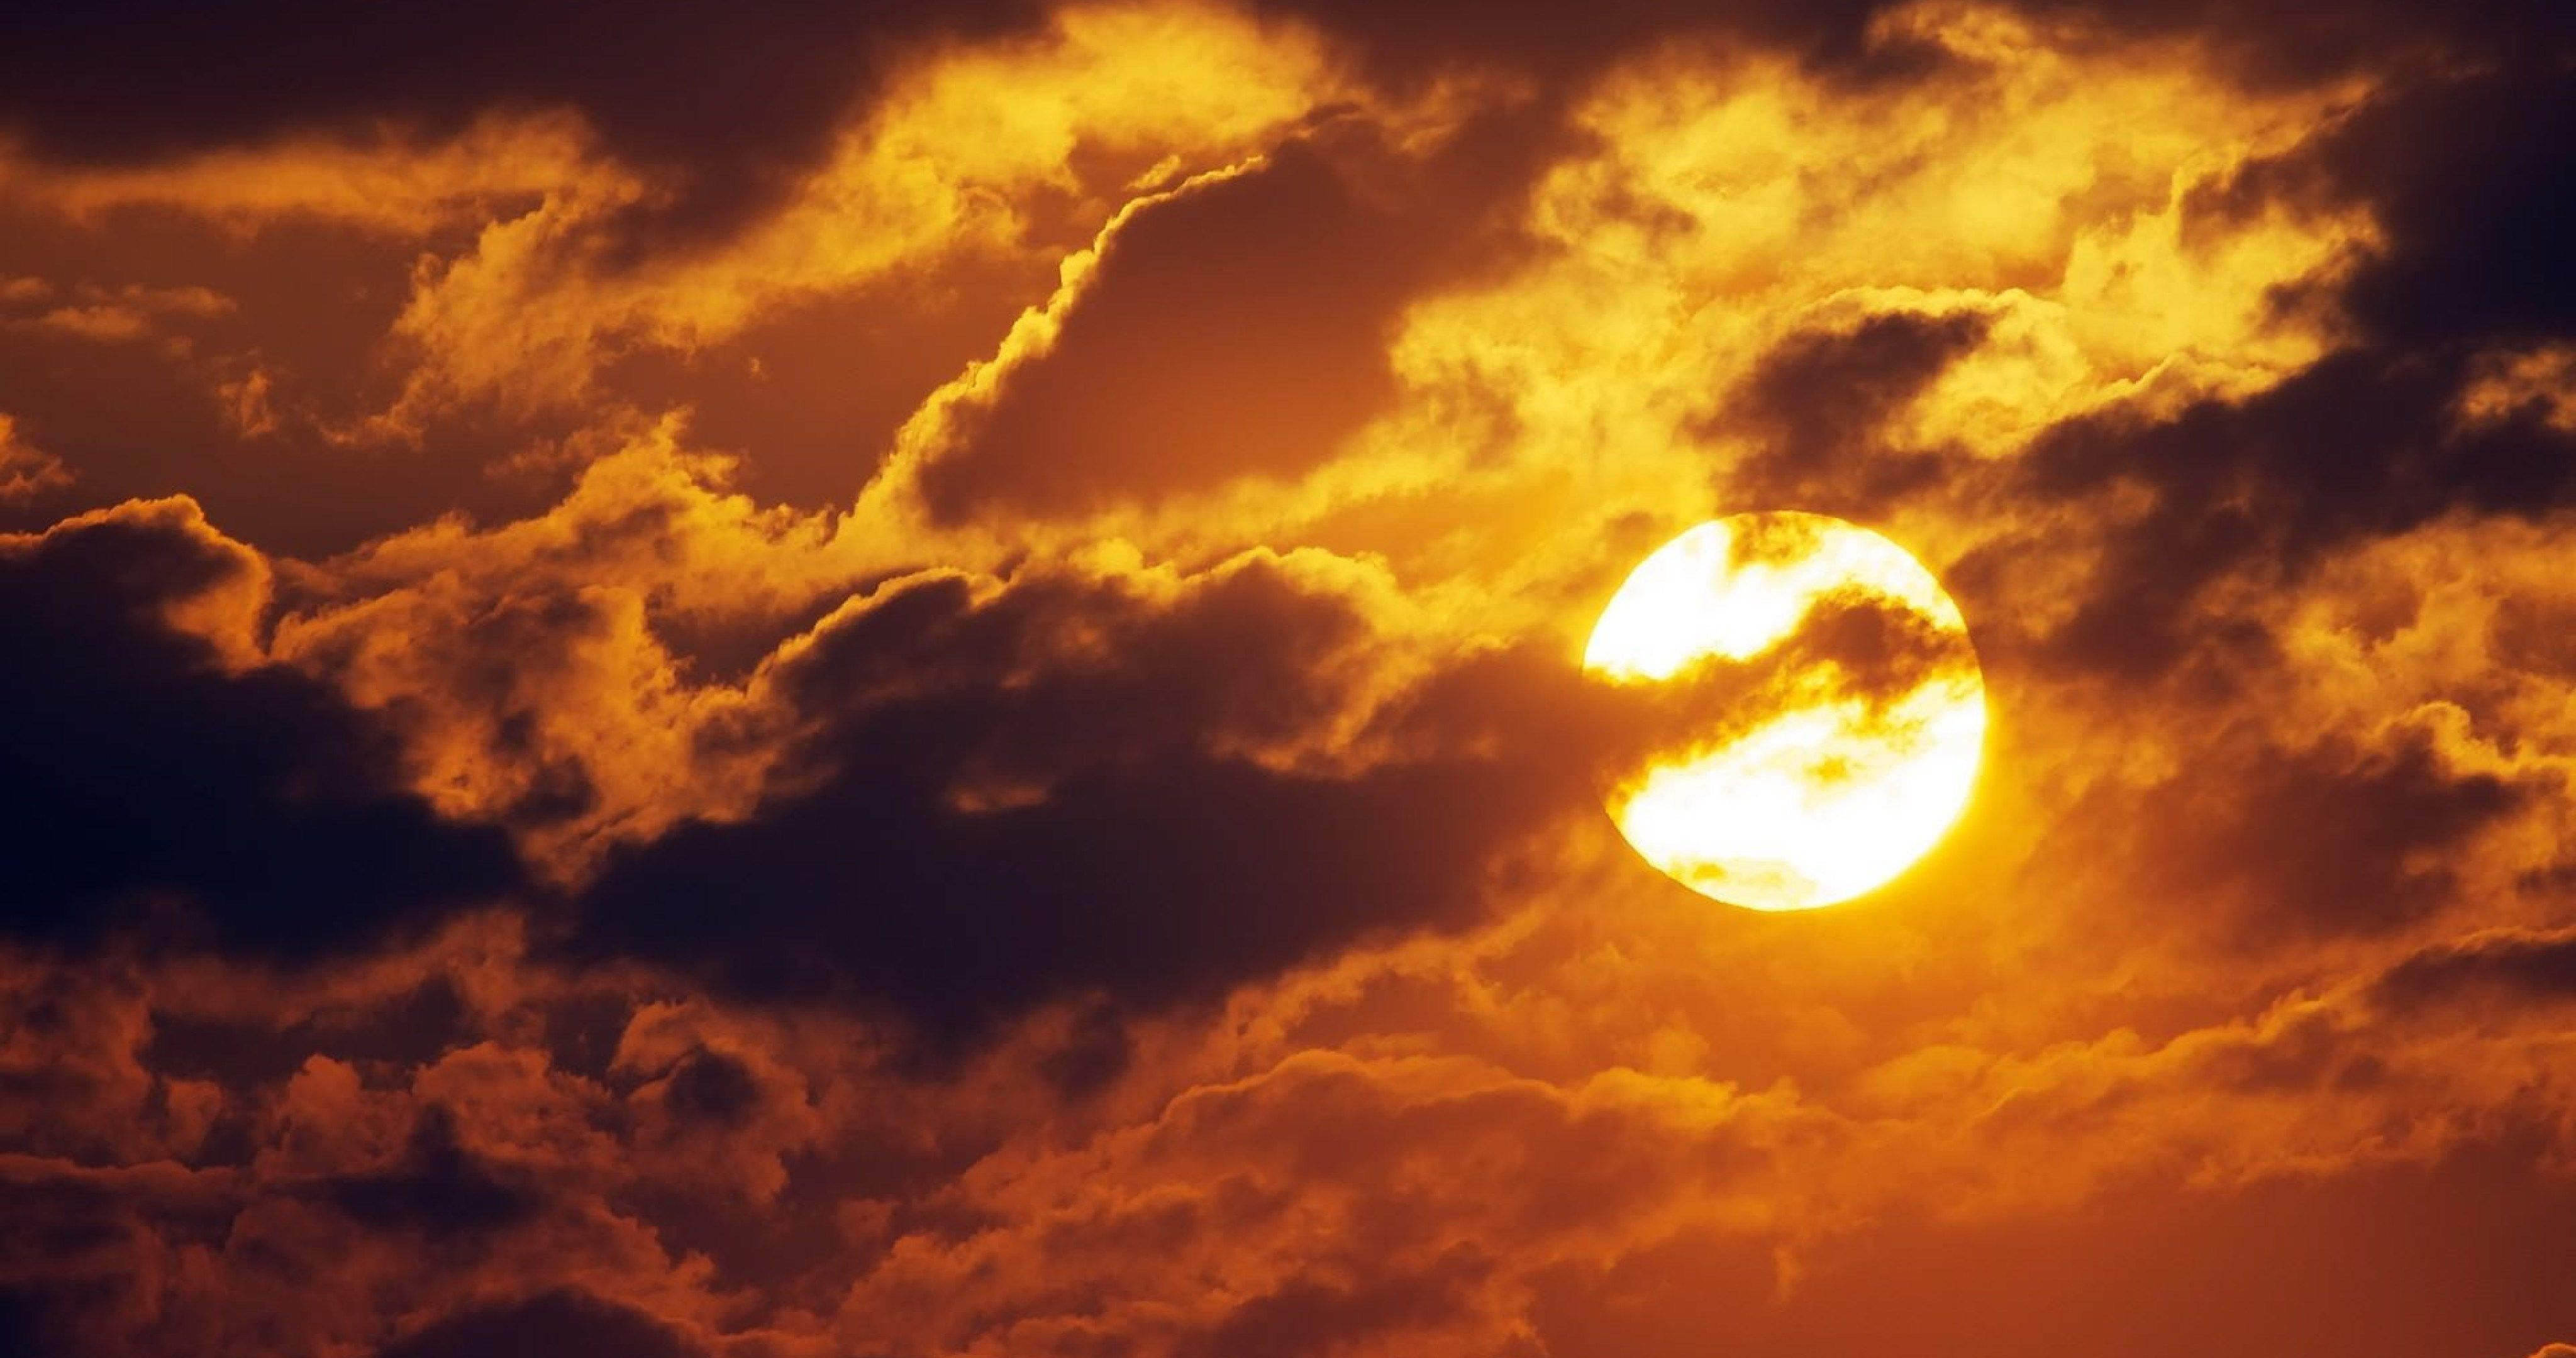 Sun In Clouds 4k Ultra HD Wallpaper Sunset